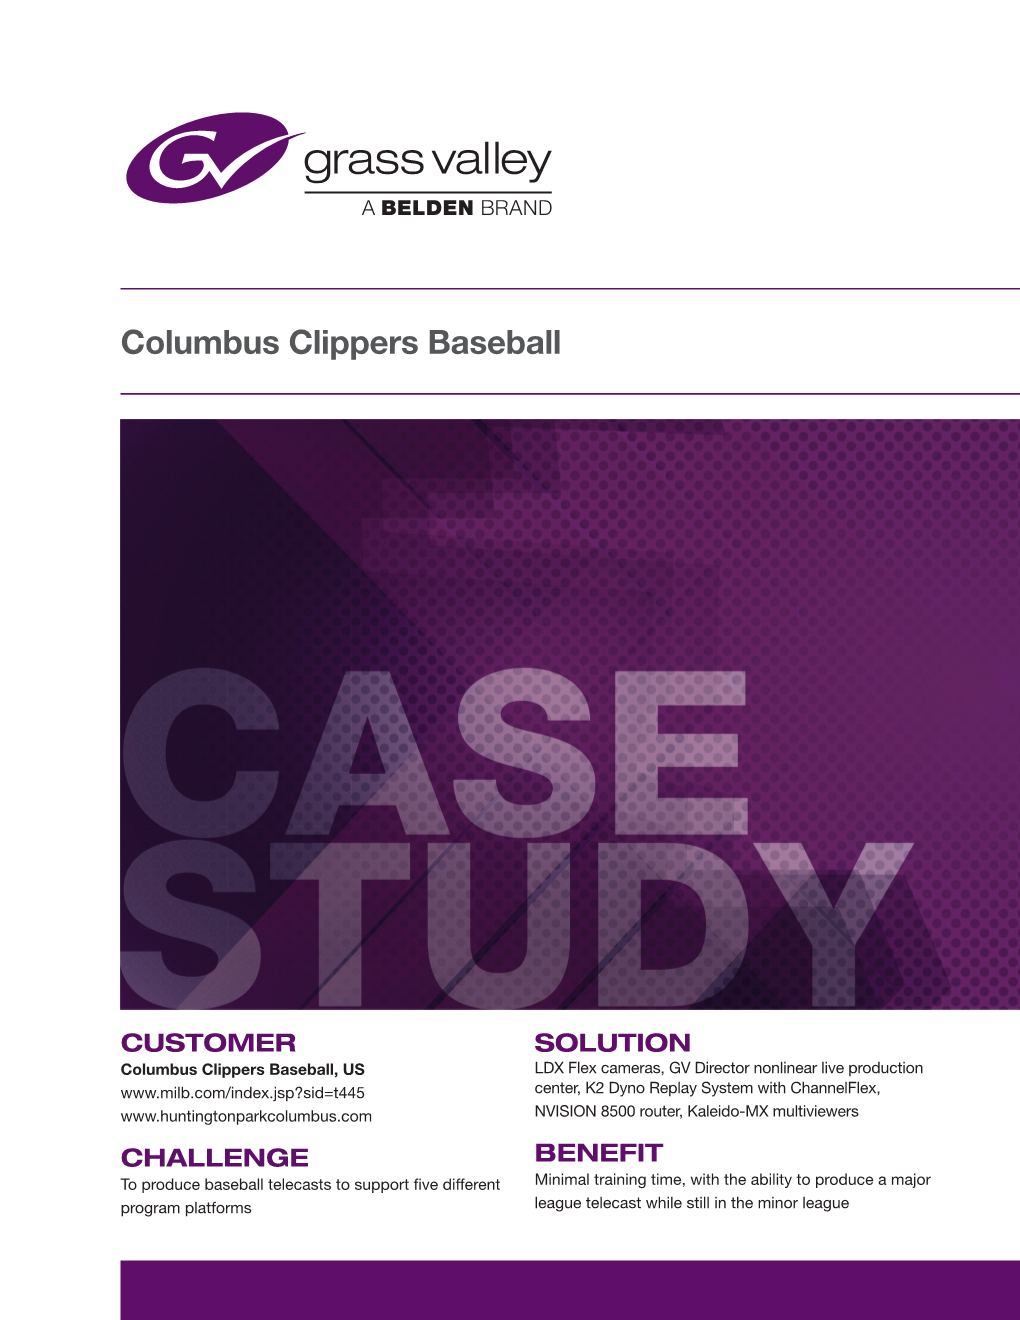 Columbus Clippers Baseball Case Study